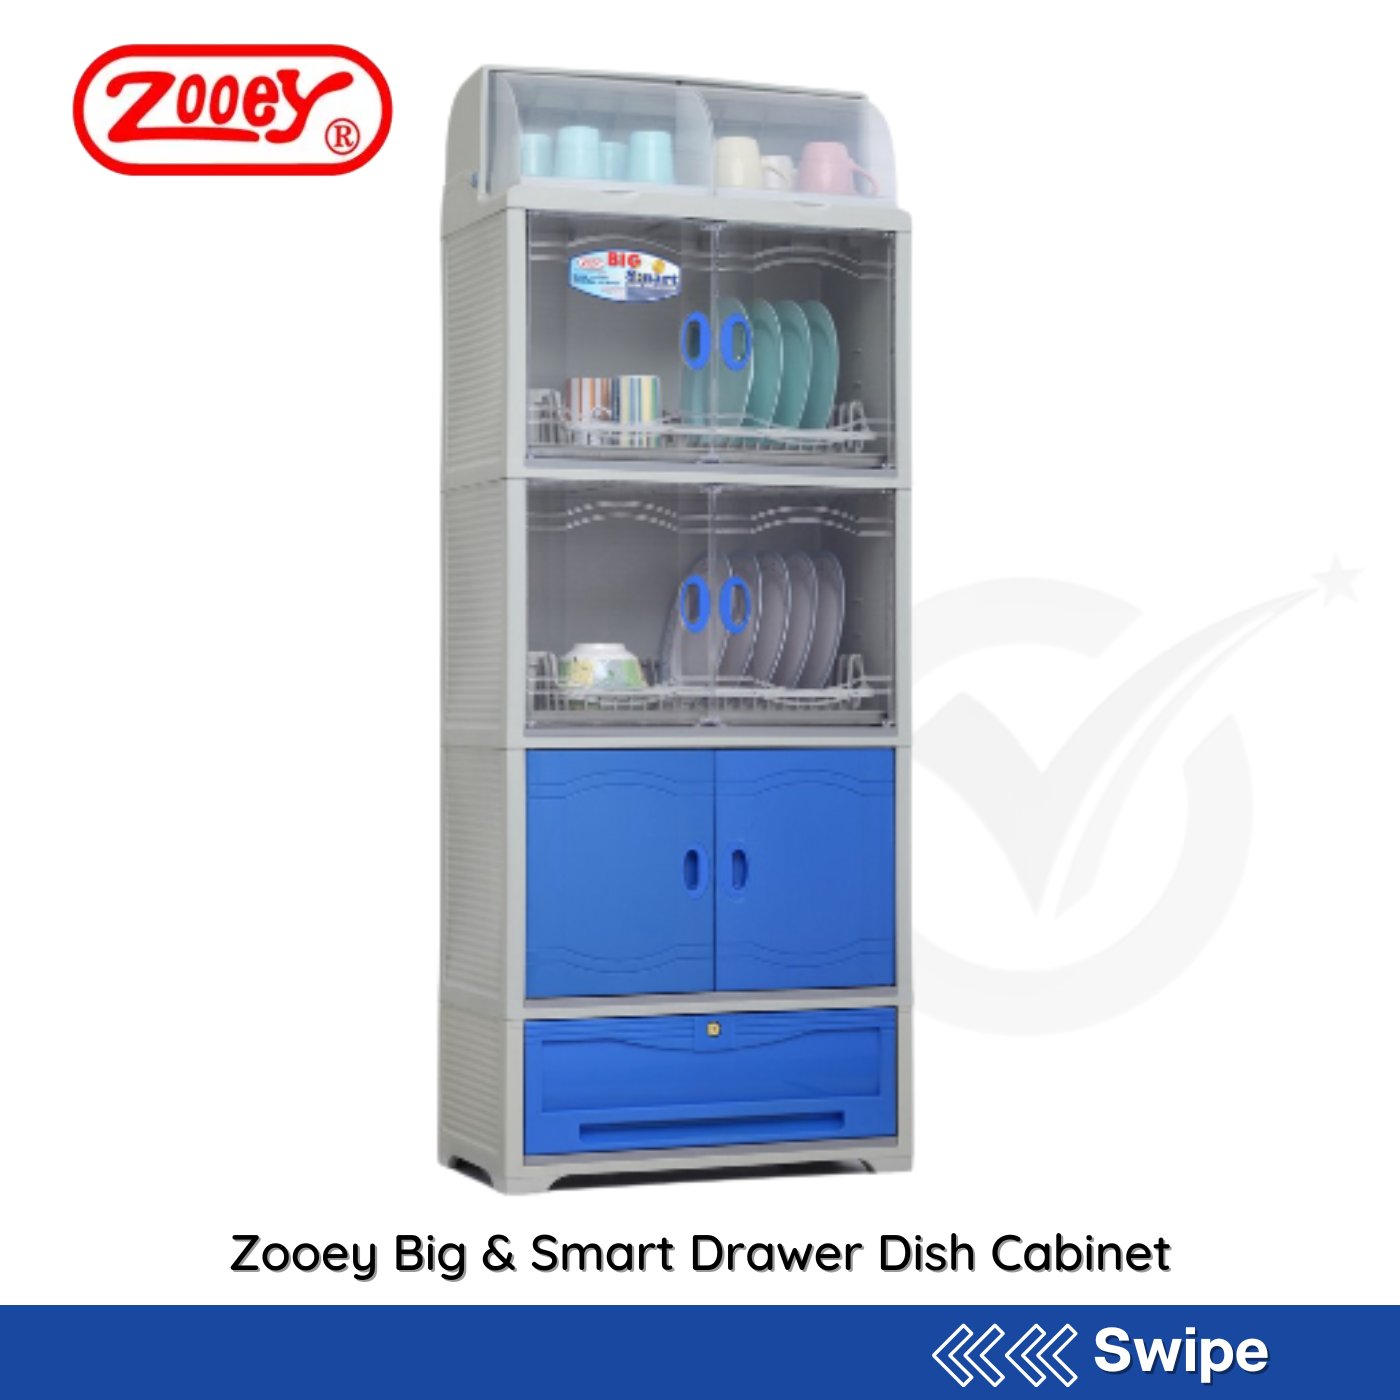 Zooey Big & Smart Drawer Dish Cabinet - People's Choice Marketing